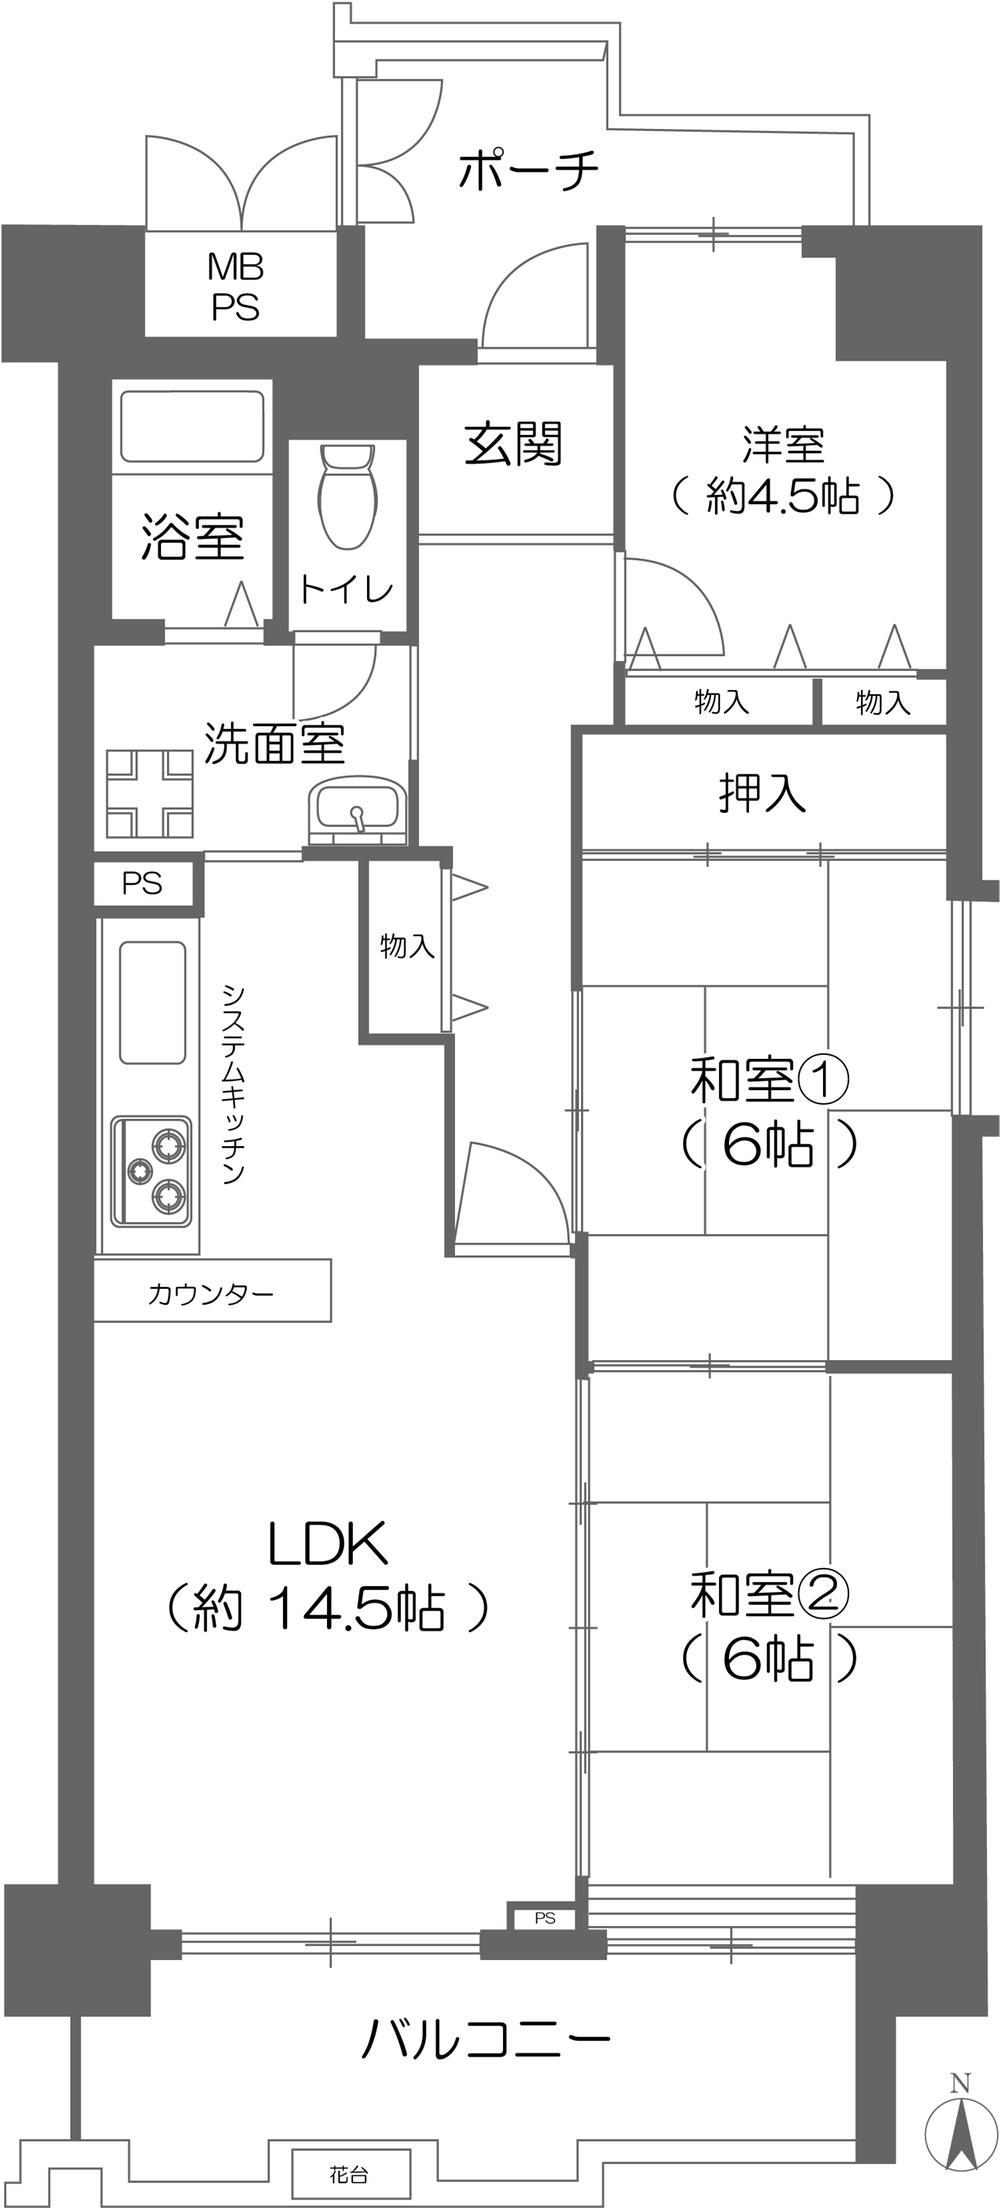 Floor plan. 3LDK, Price 31,800,000 yen, Occupied area 75.64 sq m , Balcony area 10.52 sq m